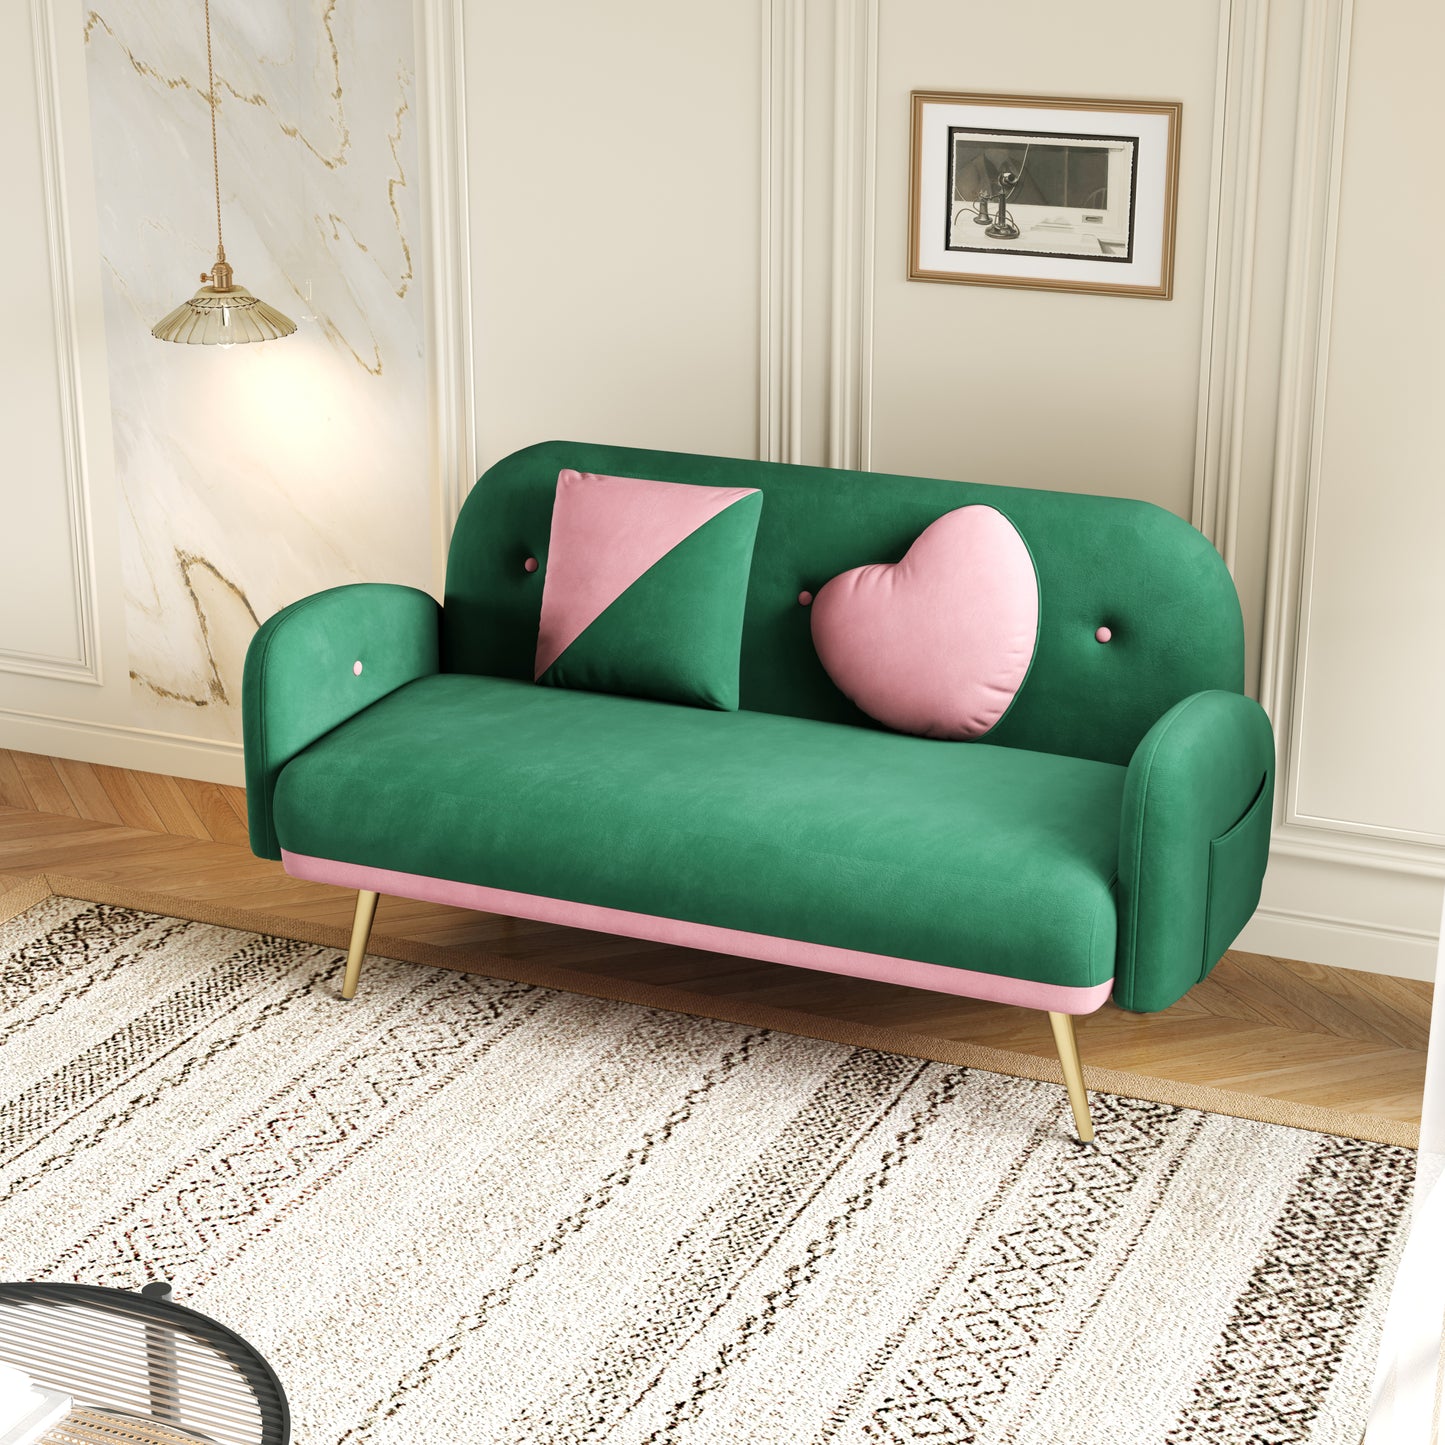 2156 sofa includes 2 pillows 58" green velvet sofa for small spaces